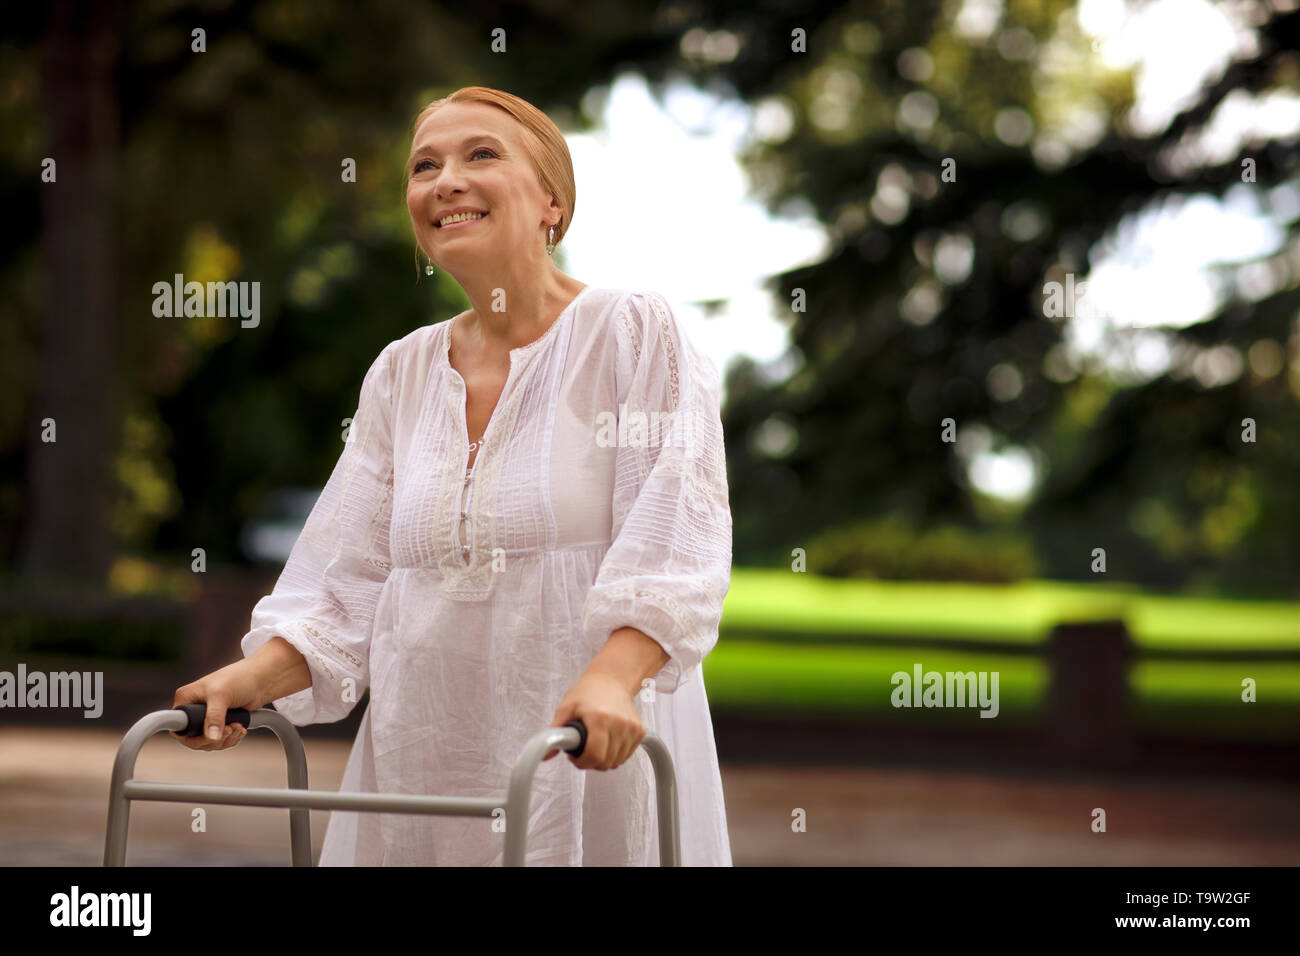 Elderly woman using a walker outdoors. Stock Photo